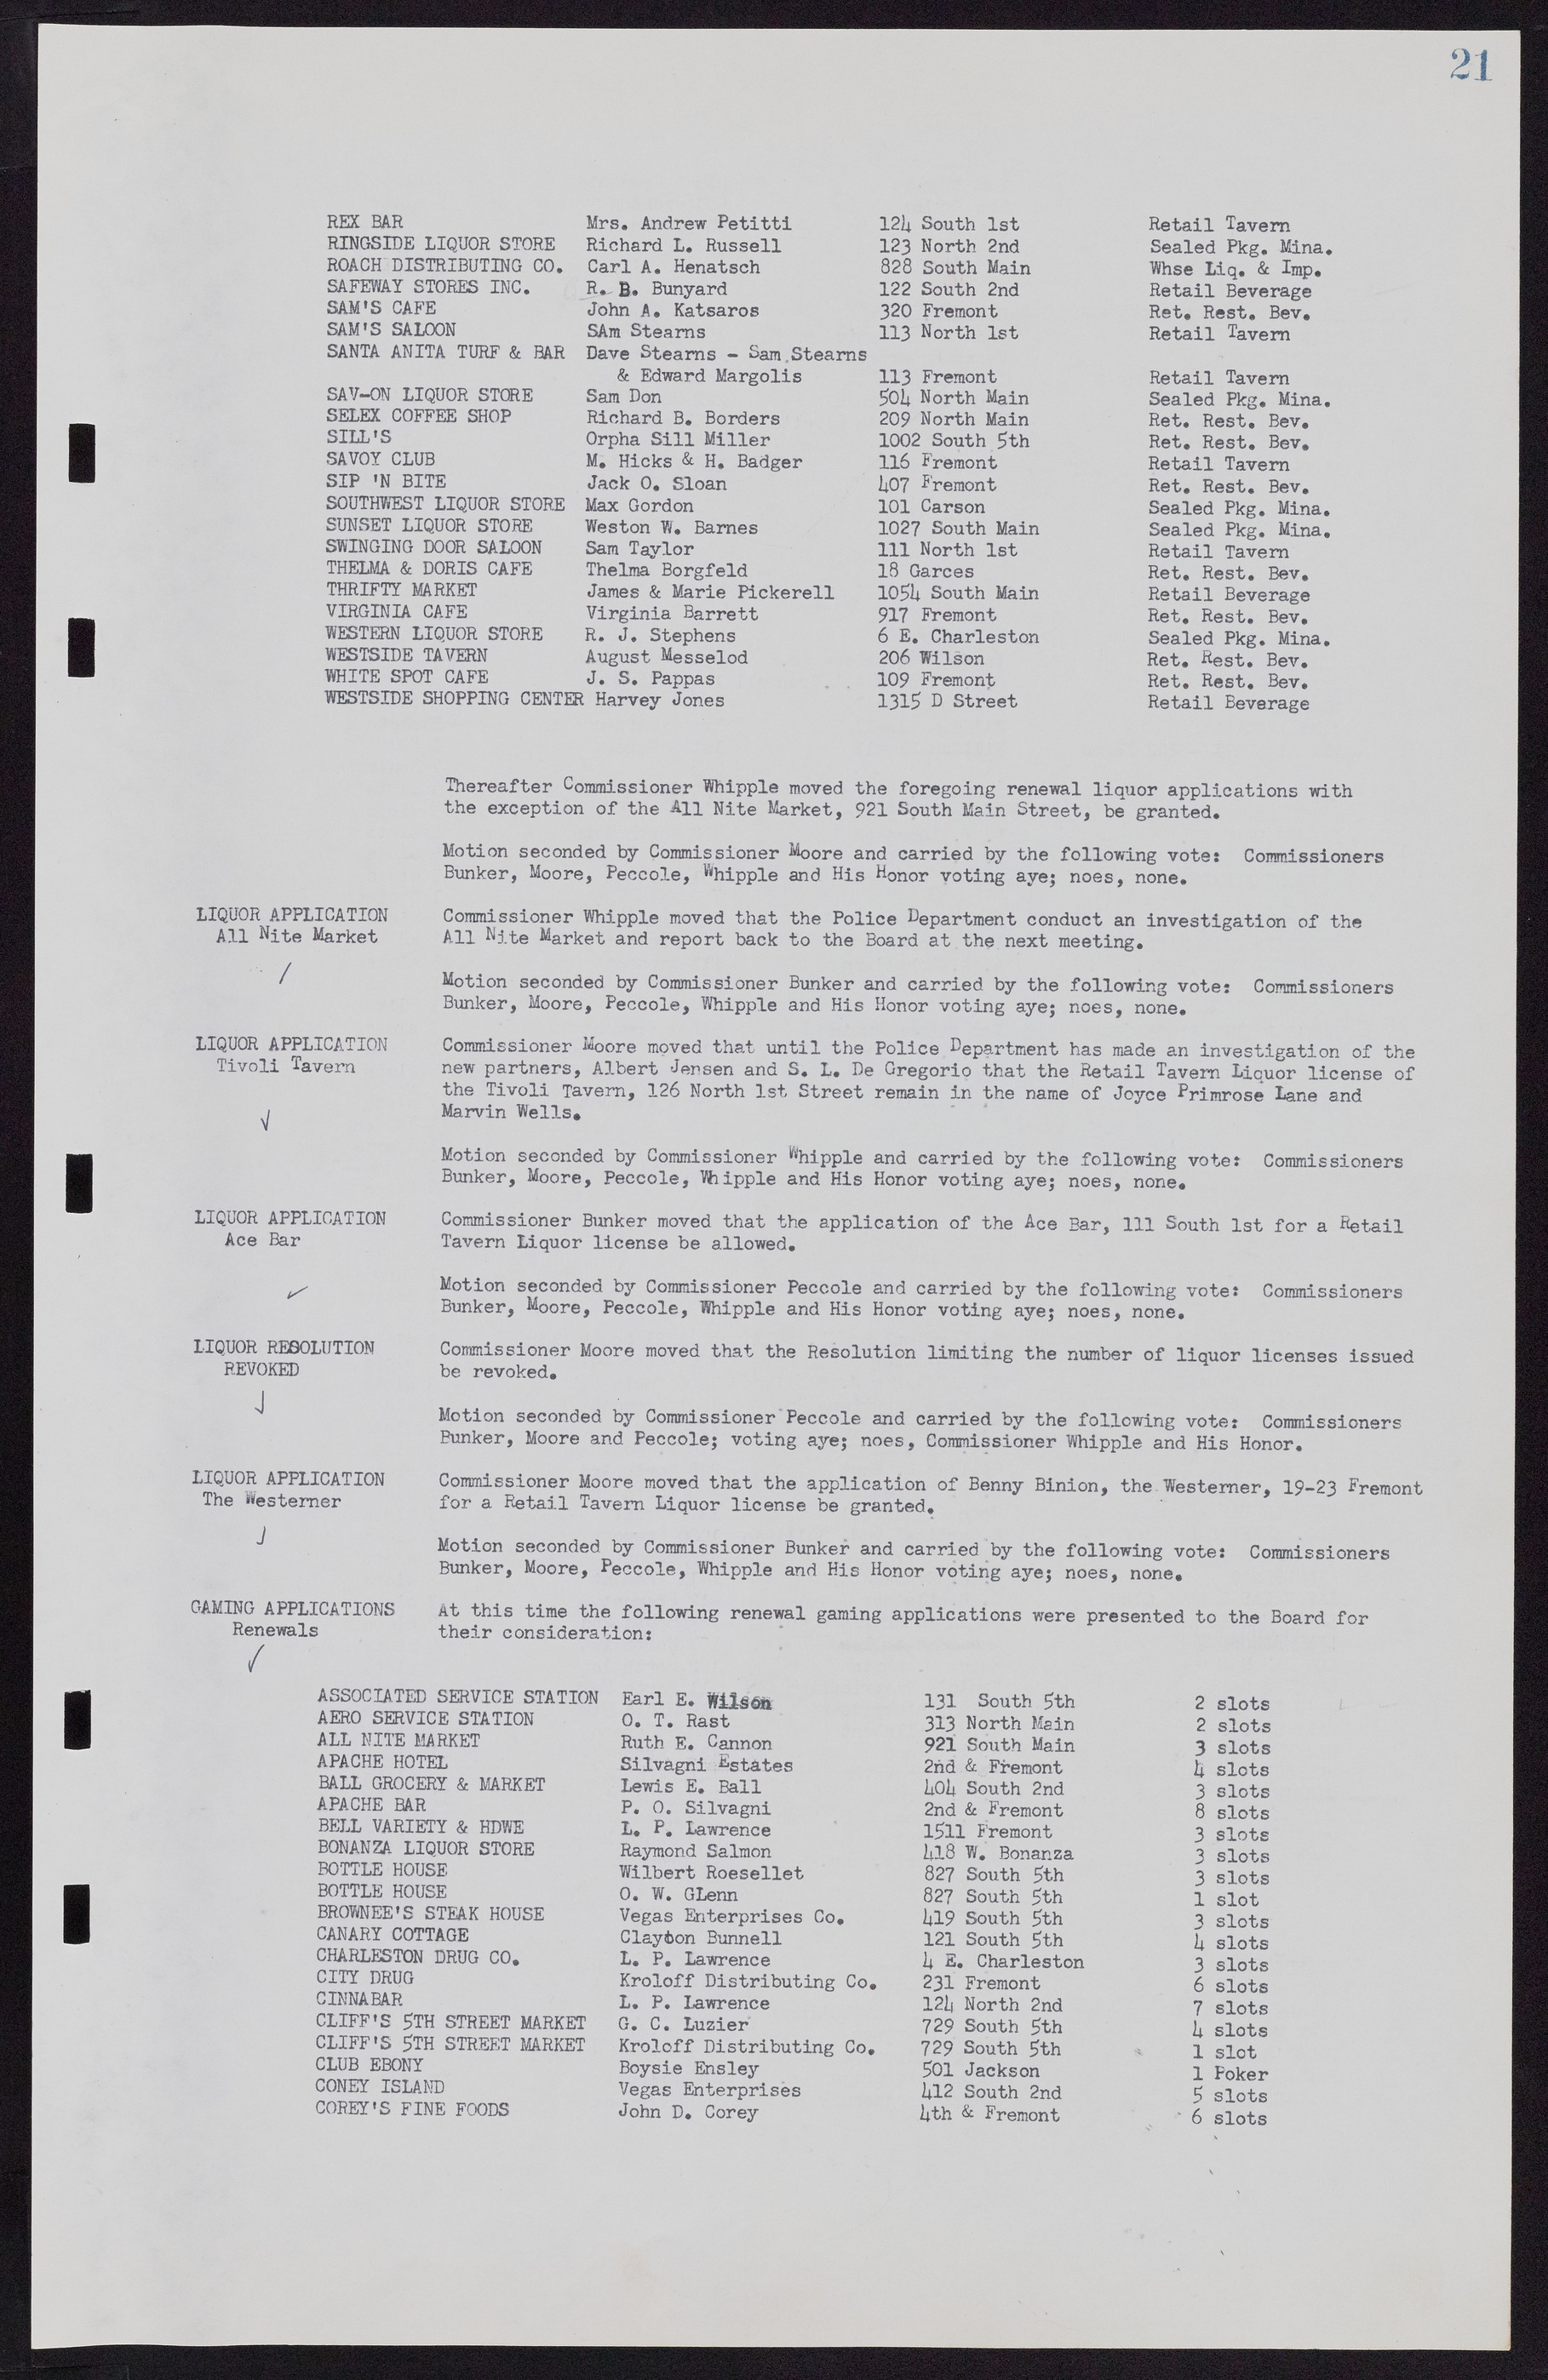 Las Vegas City Commission Minutes, November 7, 1949 to May 21, 1952, lvc000007-27